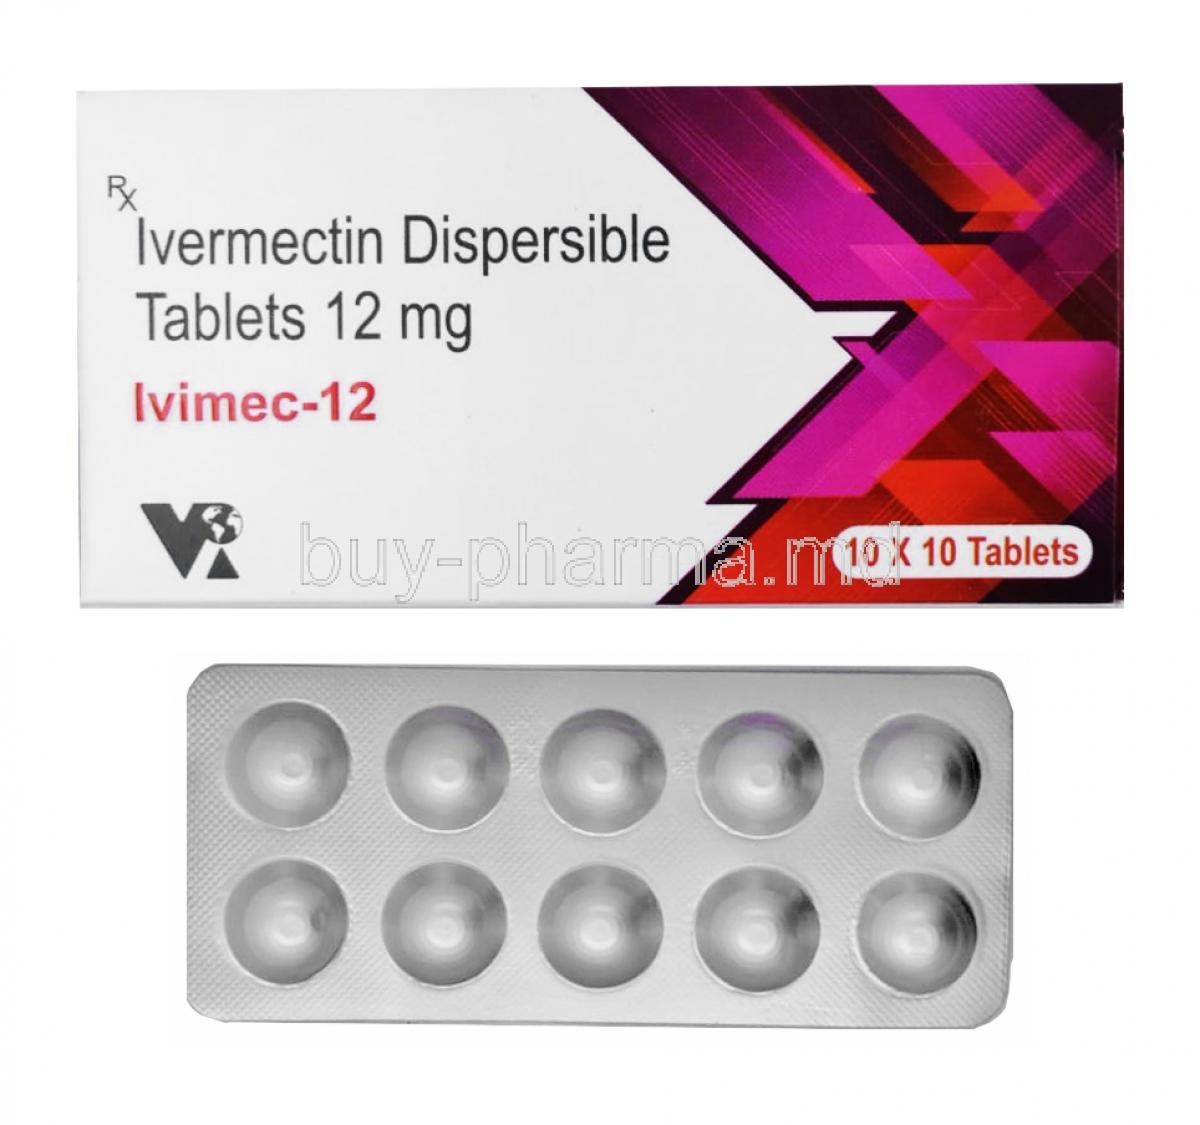 Ivimec, Ivermectin 12mg box and tableets